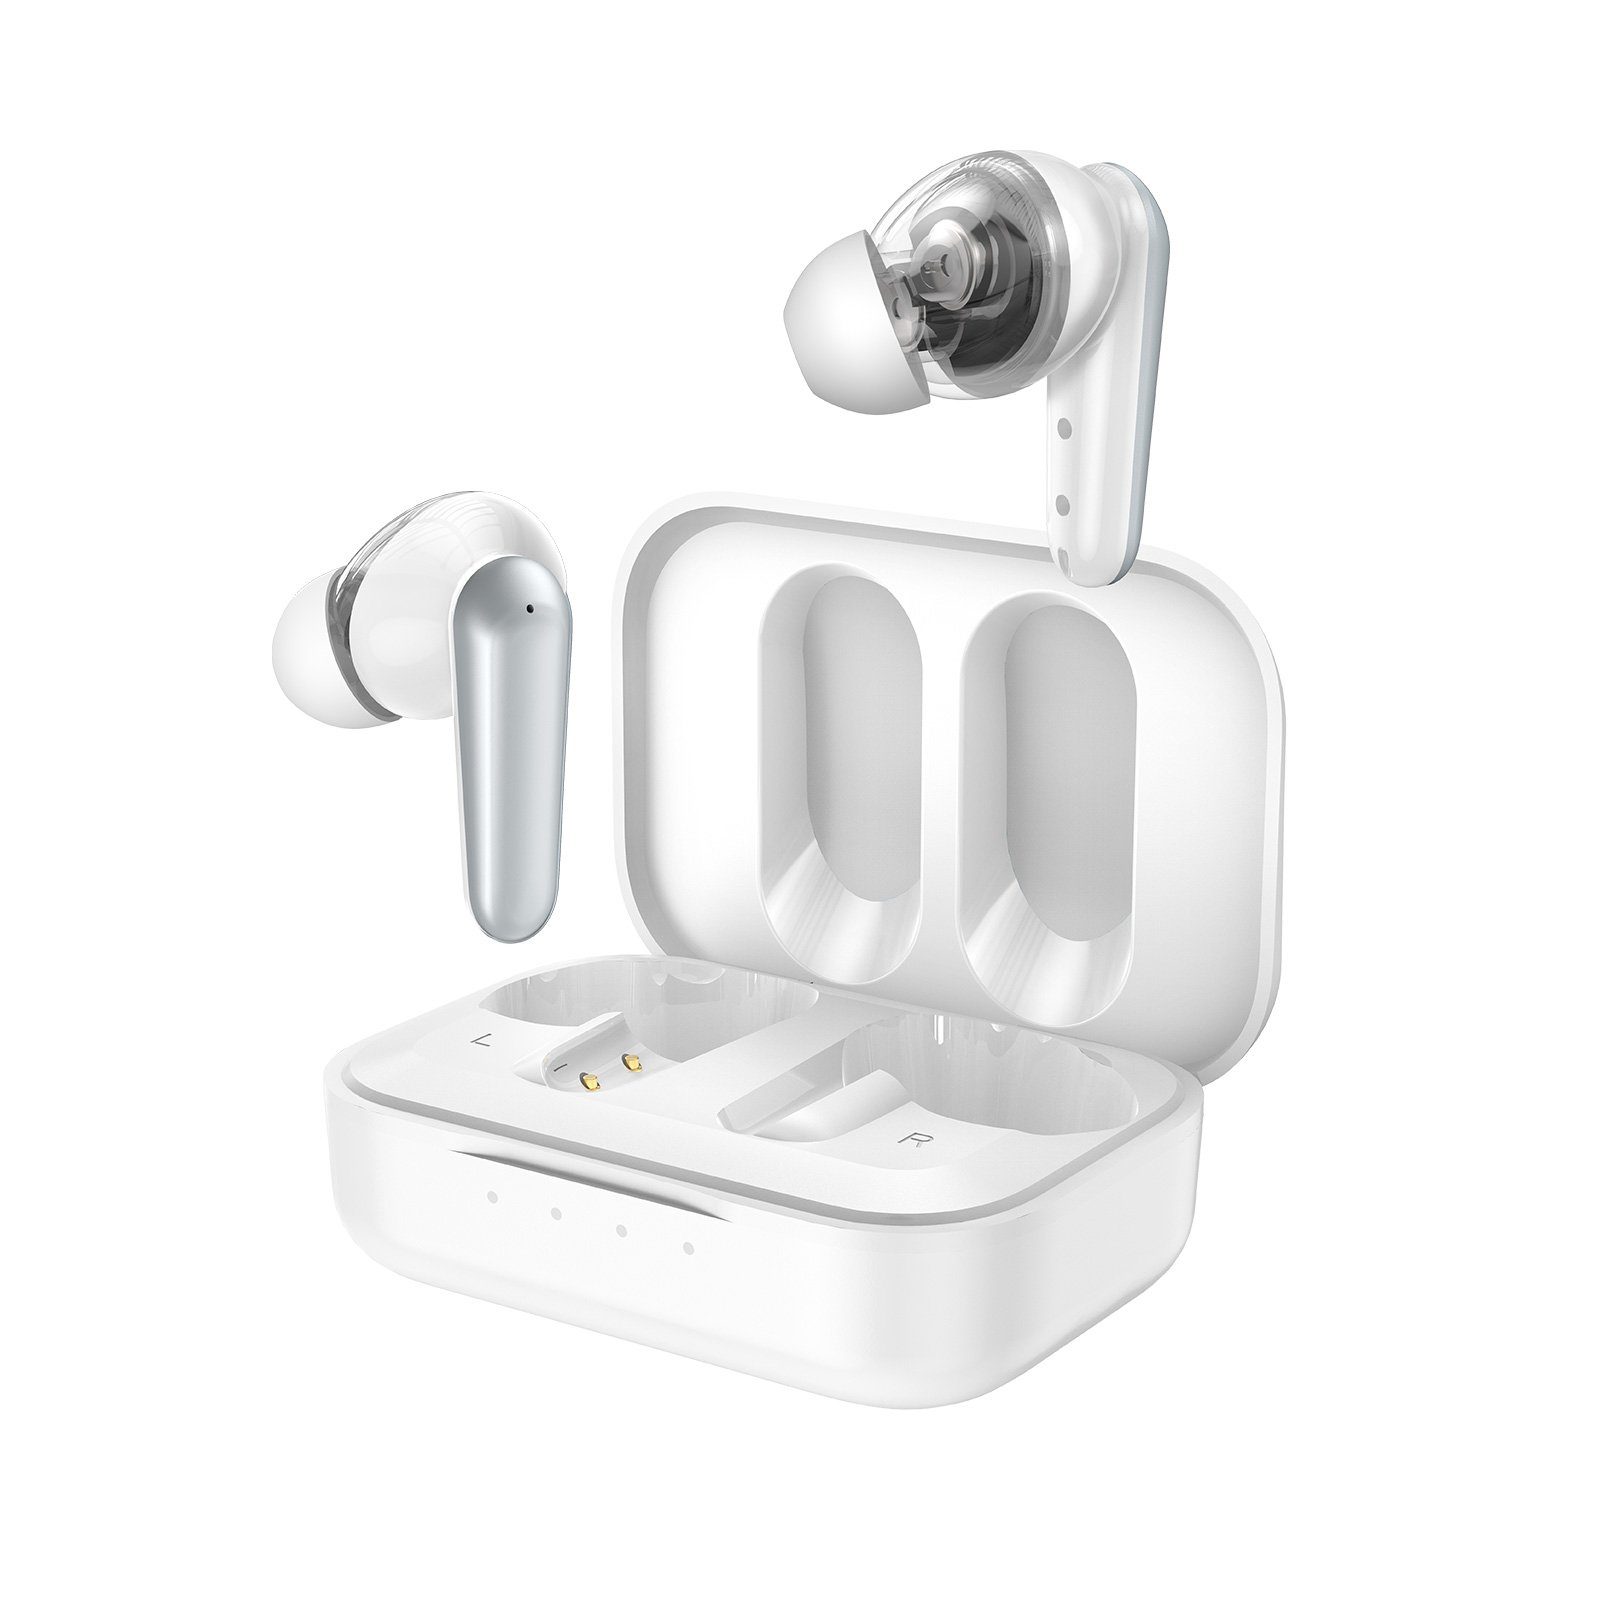 Bluetooth In Bluetooth Ear kompaktes Wireless Stabile BT5.0-Verbindung, RIVERSONG Tragekomfort, - Sound In-Ear-Kopfhörer Touch-Steuerung, Angenehmer und Kopfhörer HD-Klang, (Leichtes wireless Weiß Design, True Kopfhörer Kopfhörer HD-Klang)